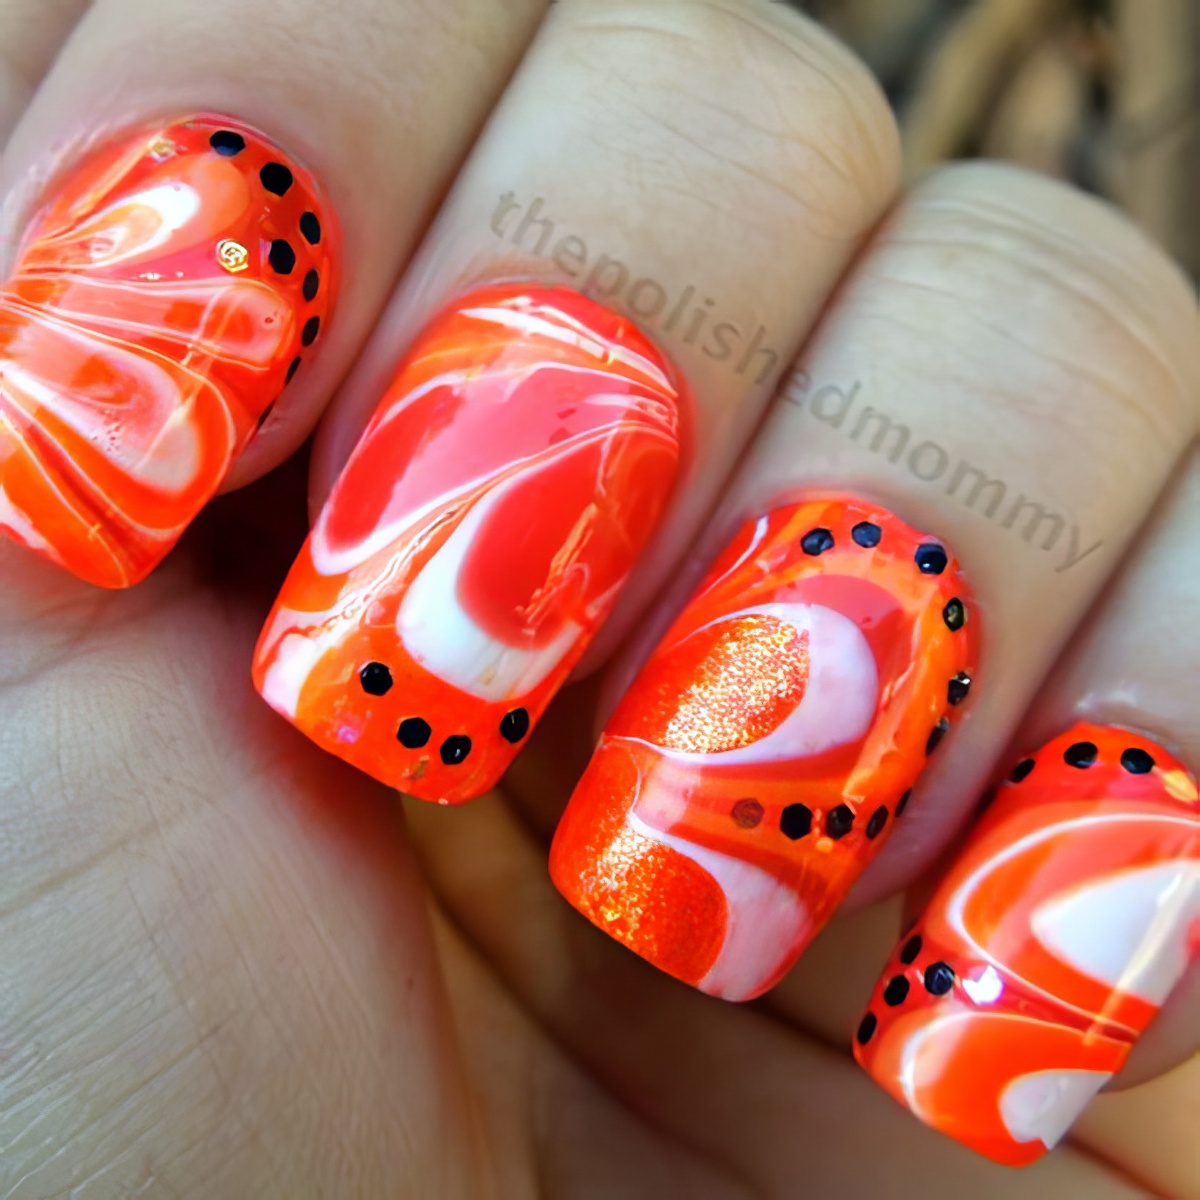 Go festive and orangey with this orange nail art design this Halloween!